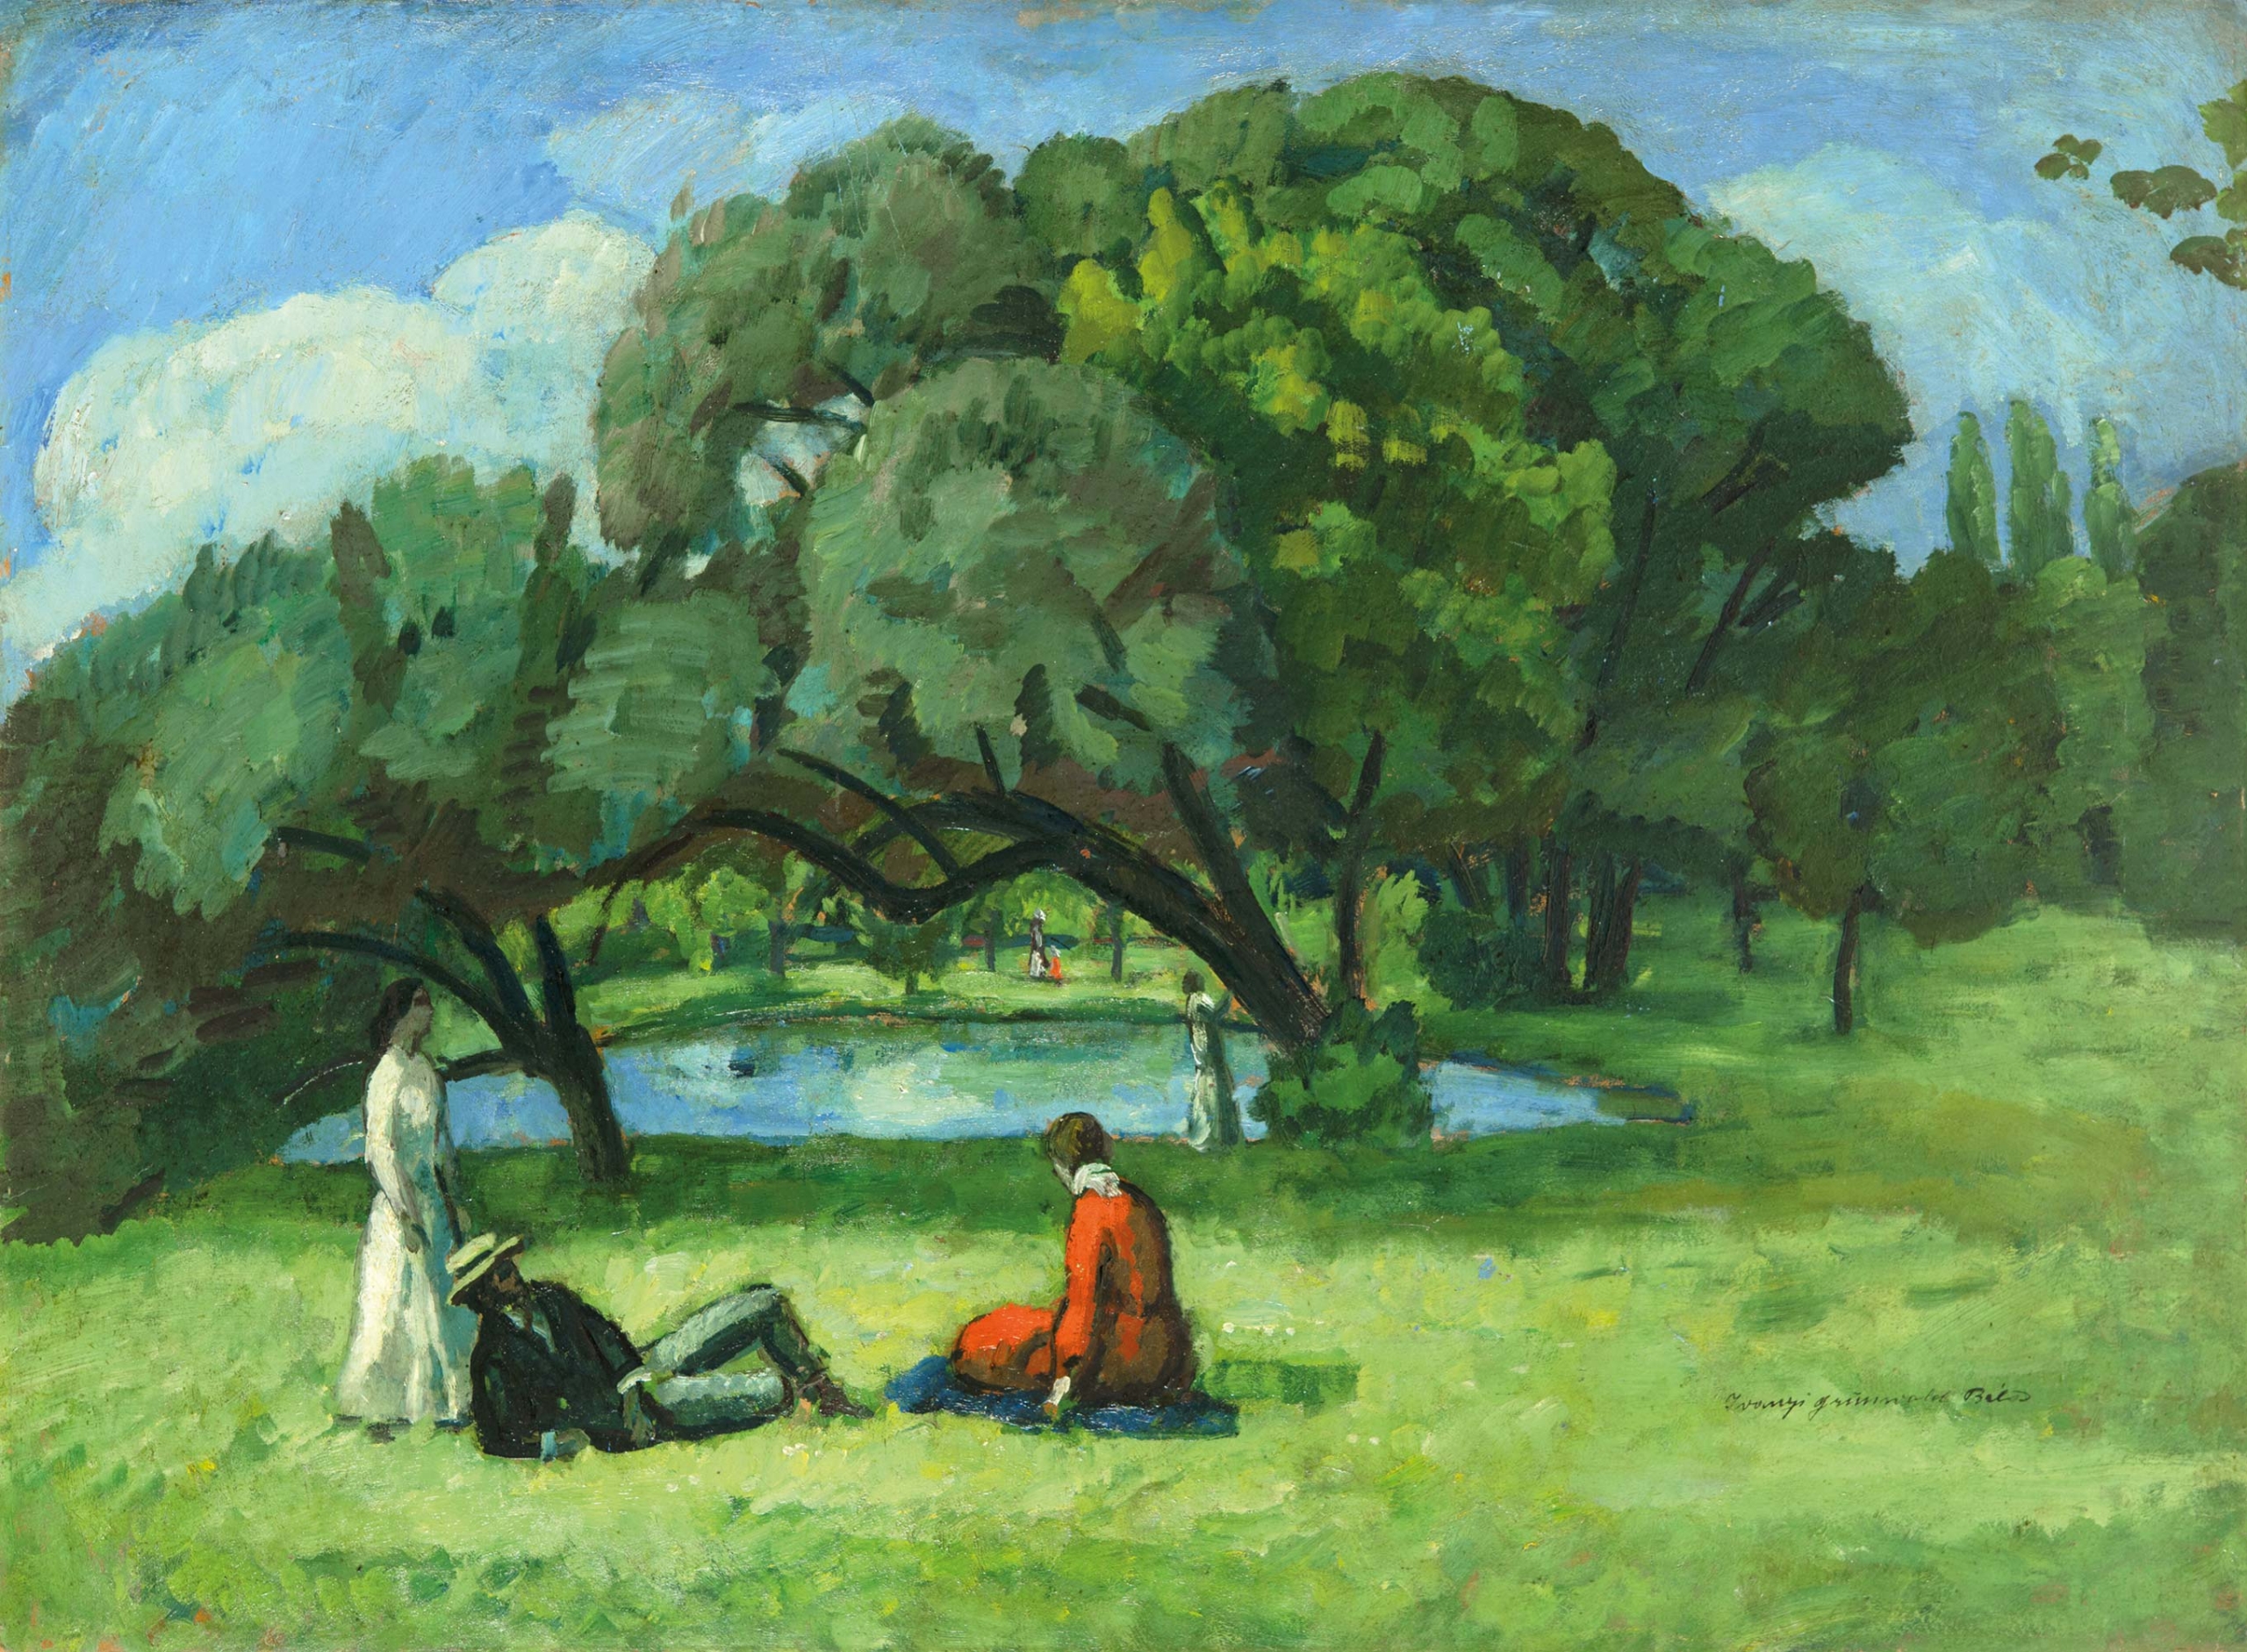 Iványi Grünwald Béla (1867-1940) By the Lake, around 1910